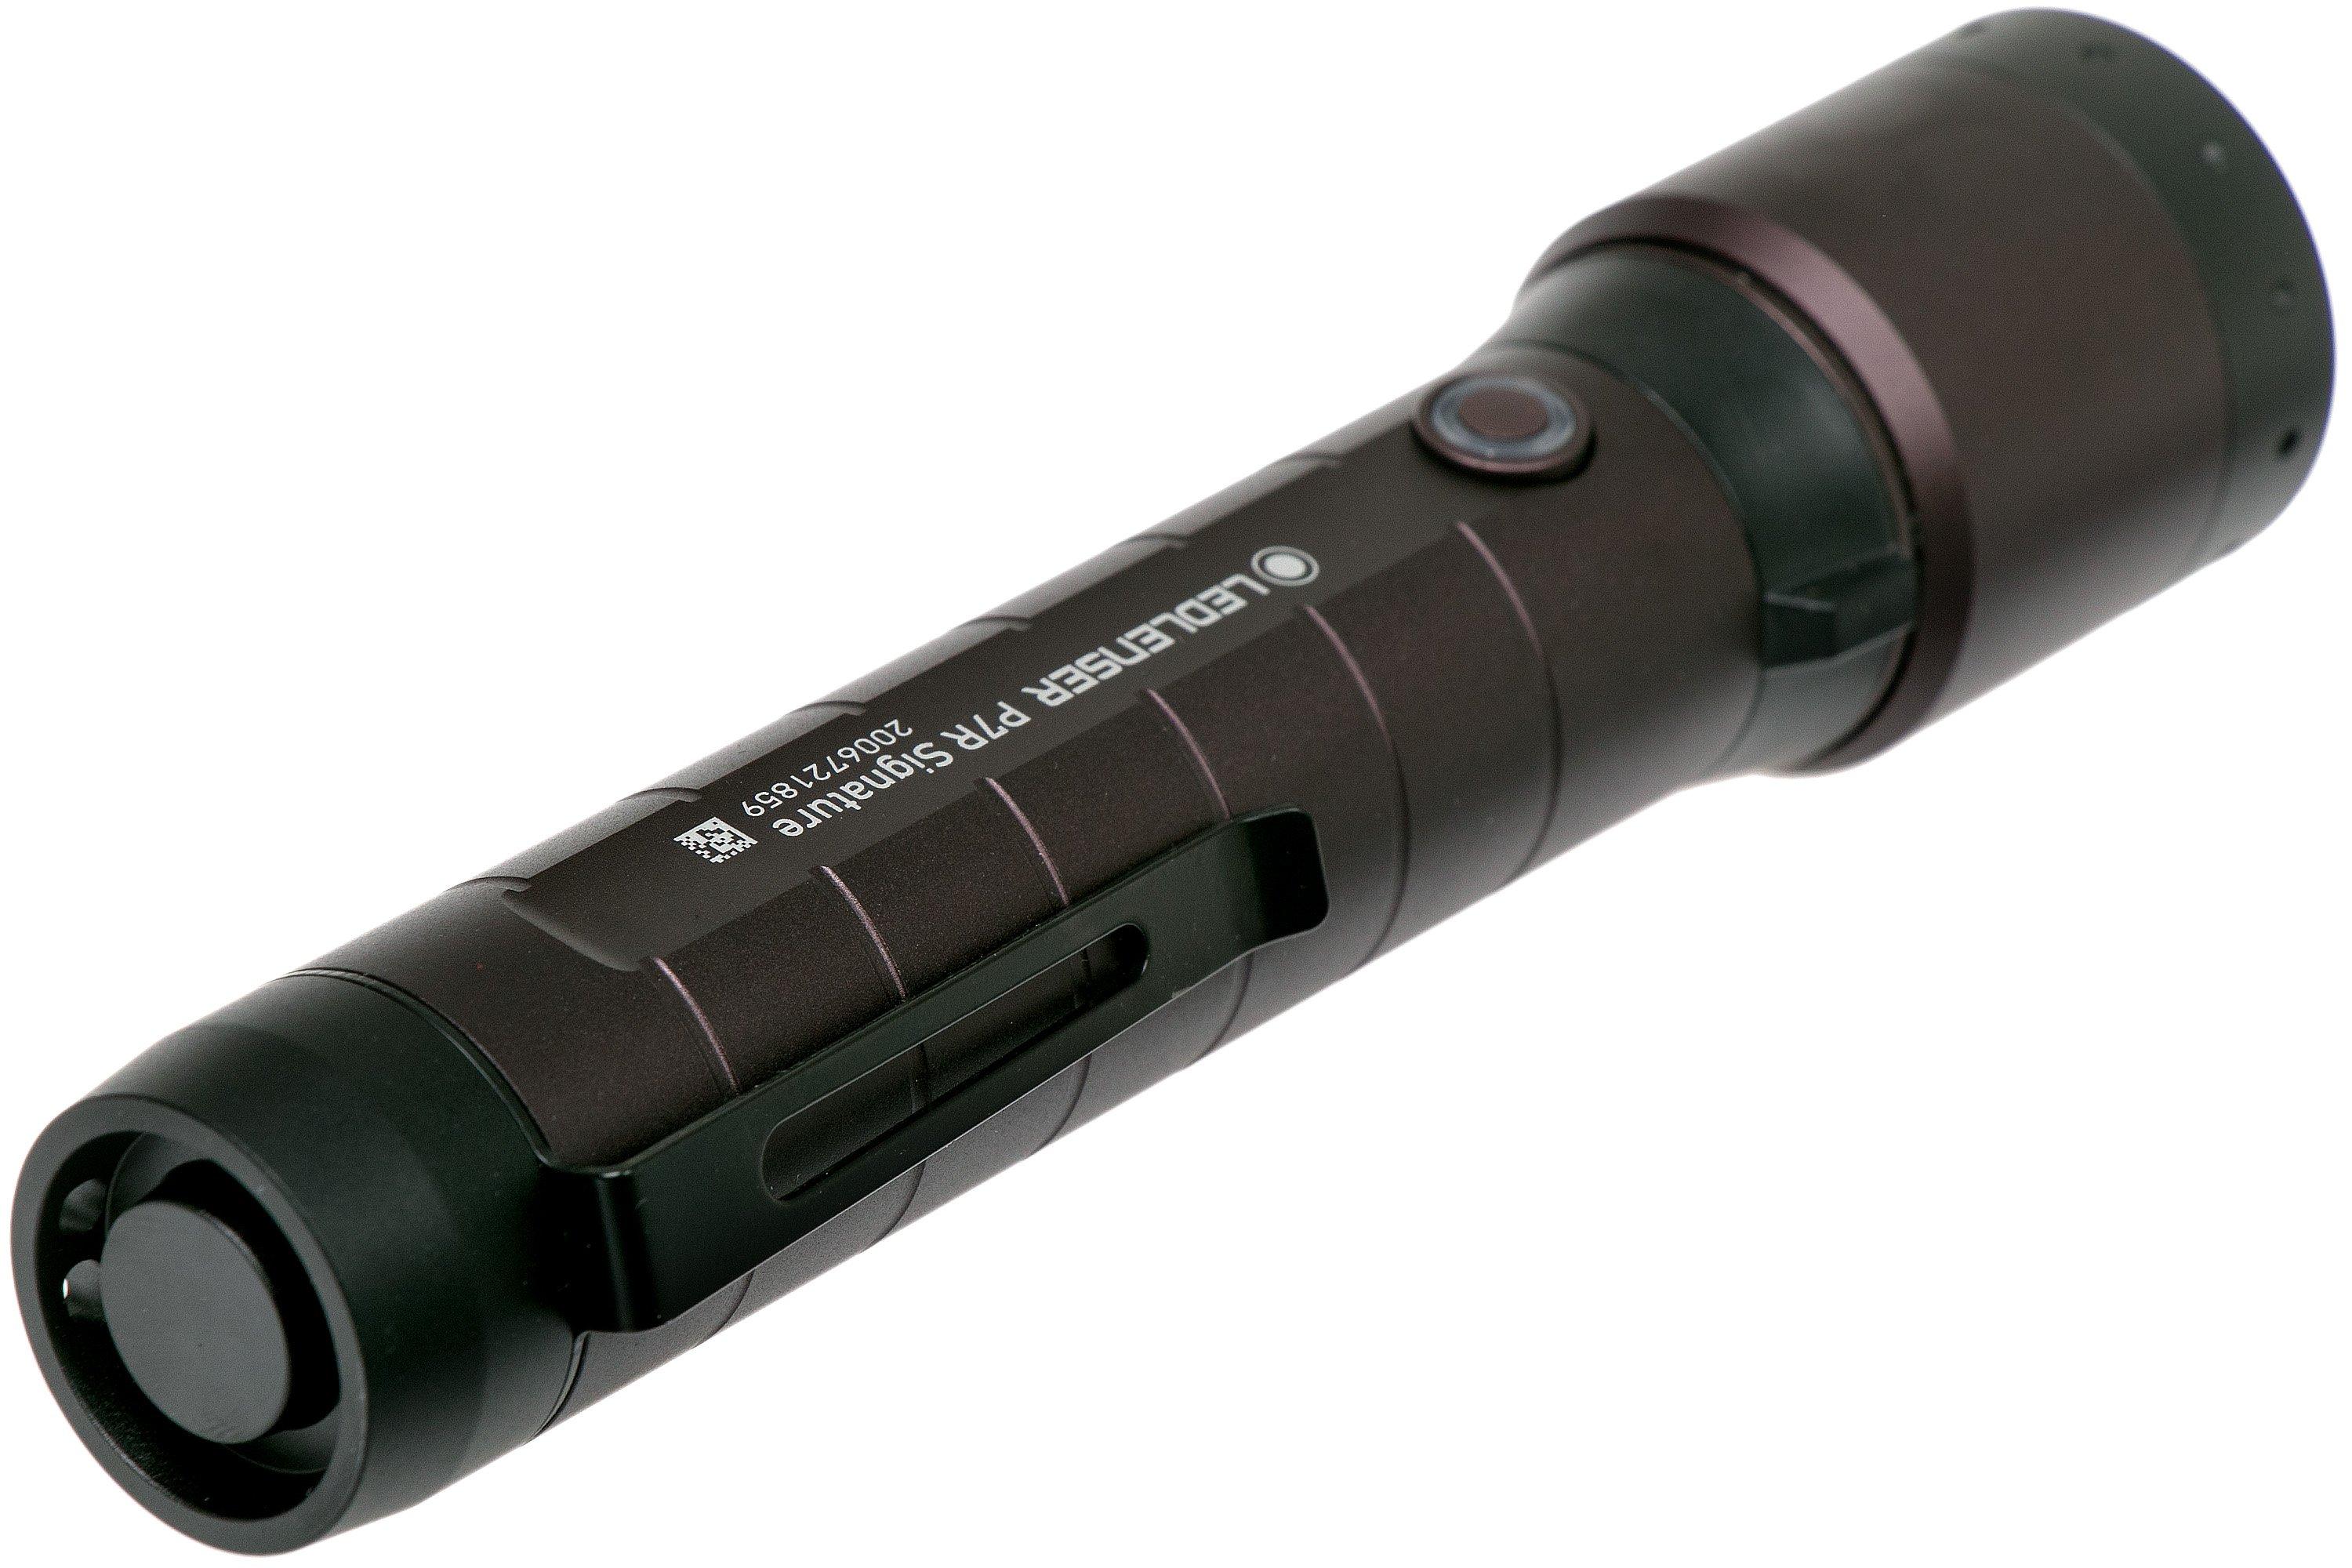 Ledlenser P7R flashlight | Advantageously shopping at